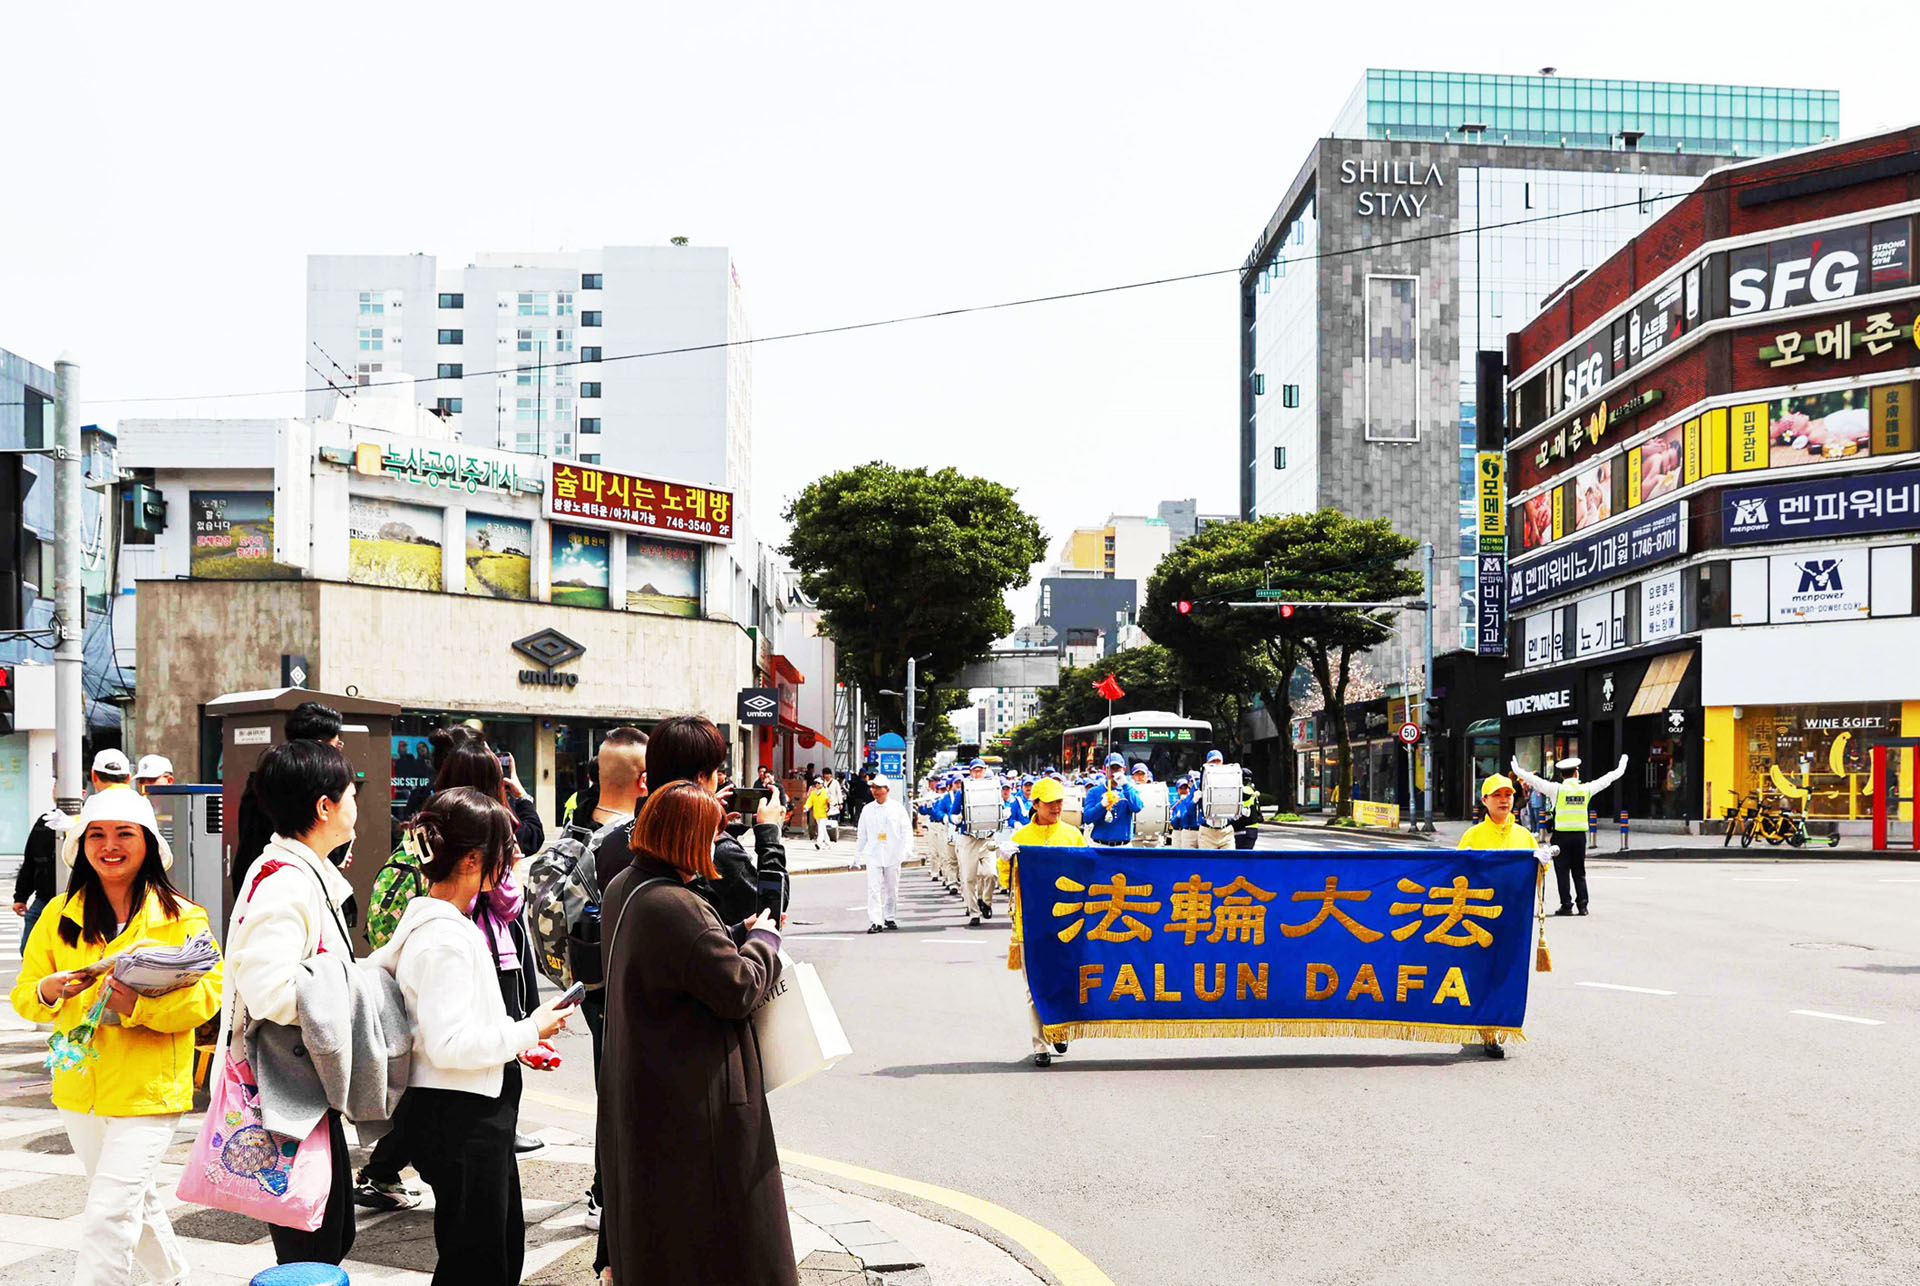 Image for article Jeju Island, South Korea: Introducing Falun Dafa to Residents and Tourists